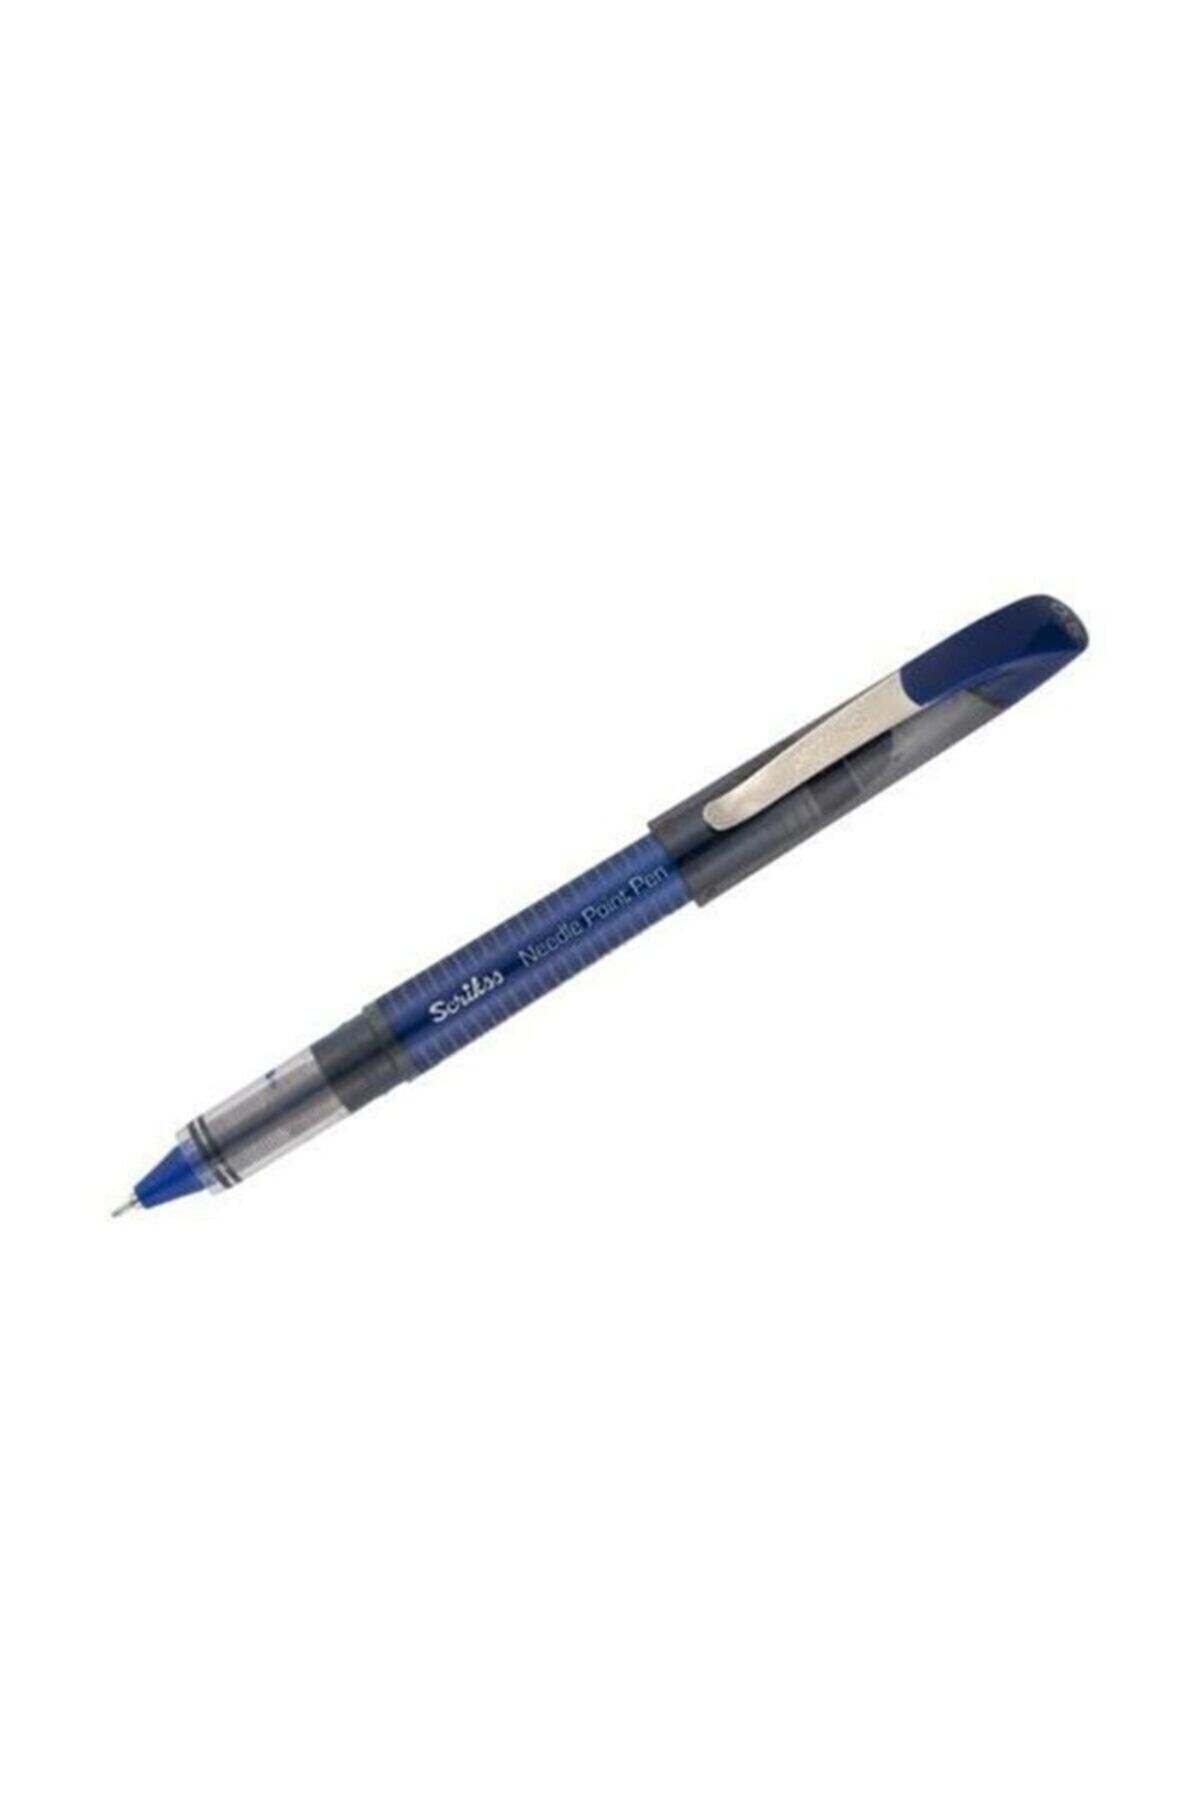 Scrikss Needle Point Pen Roller 05 Mm Mavi Np-68